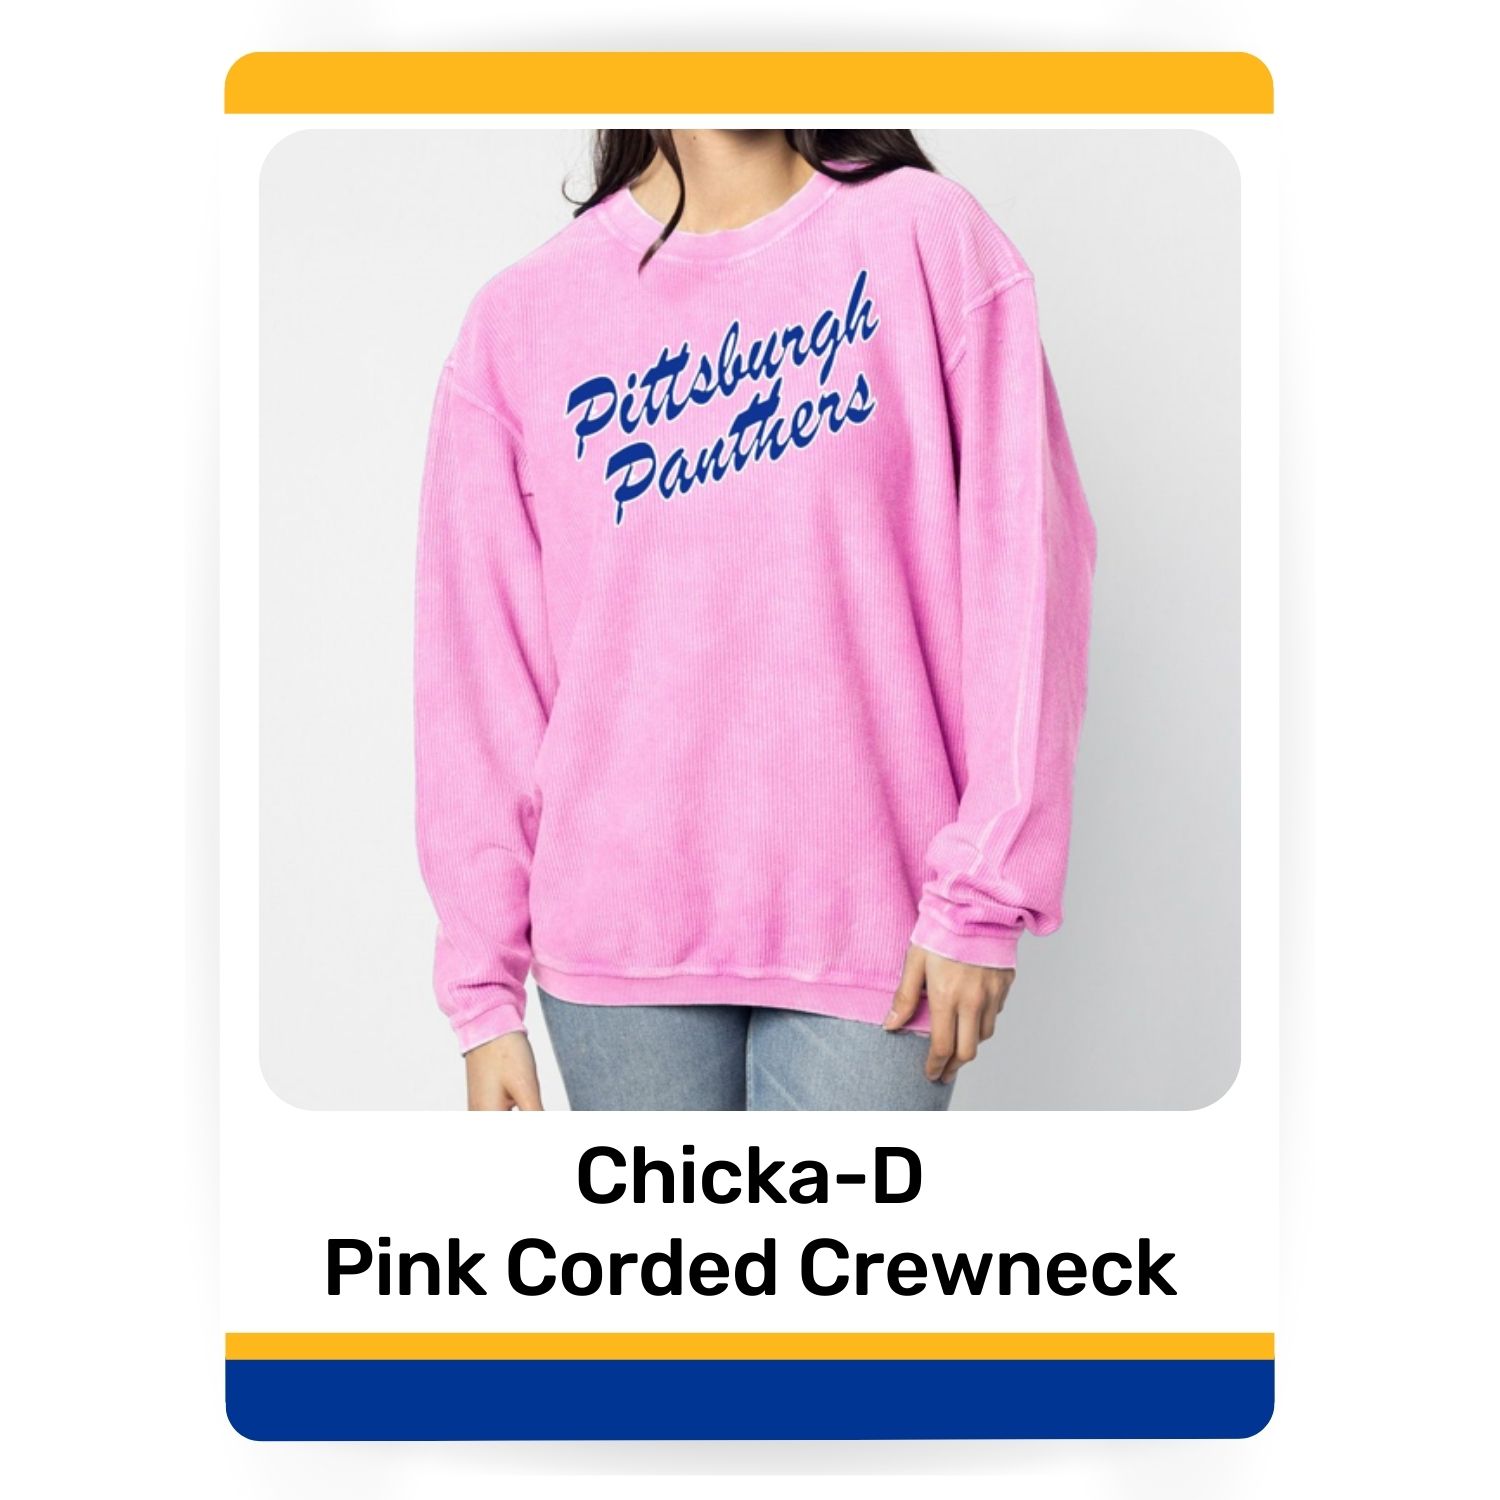 Chicka-D Pink Corded Crewneck